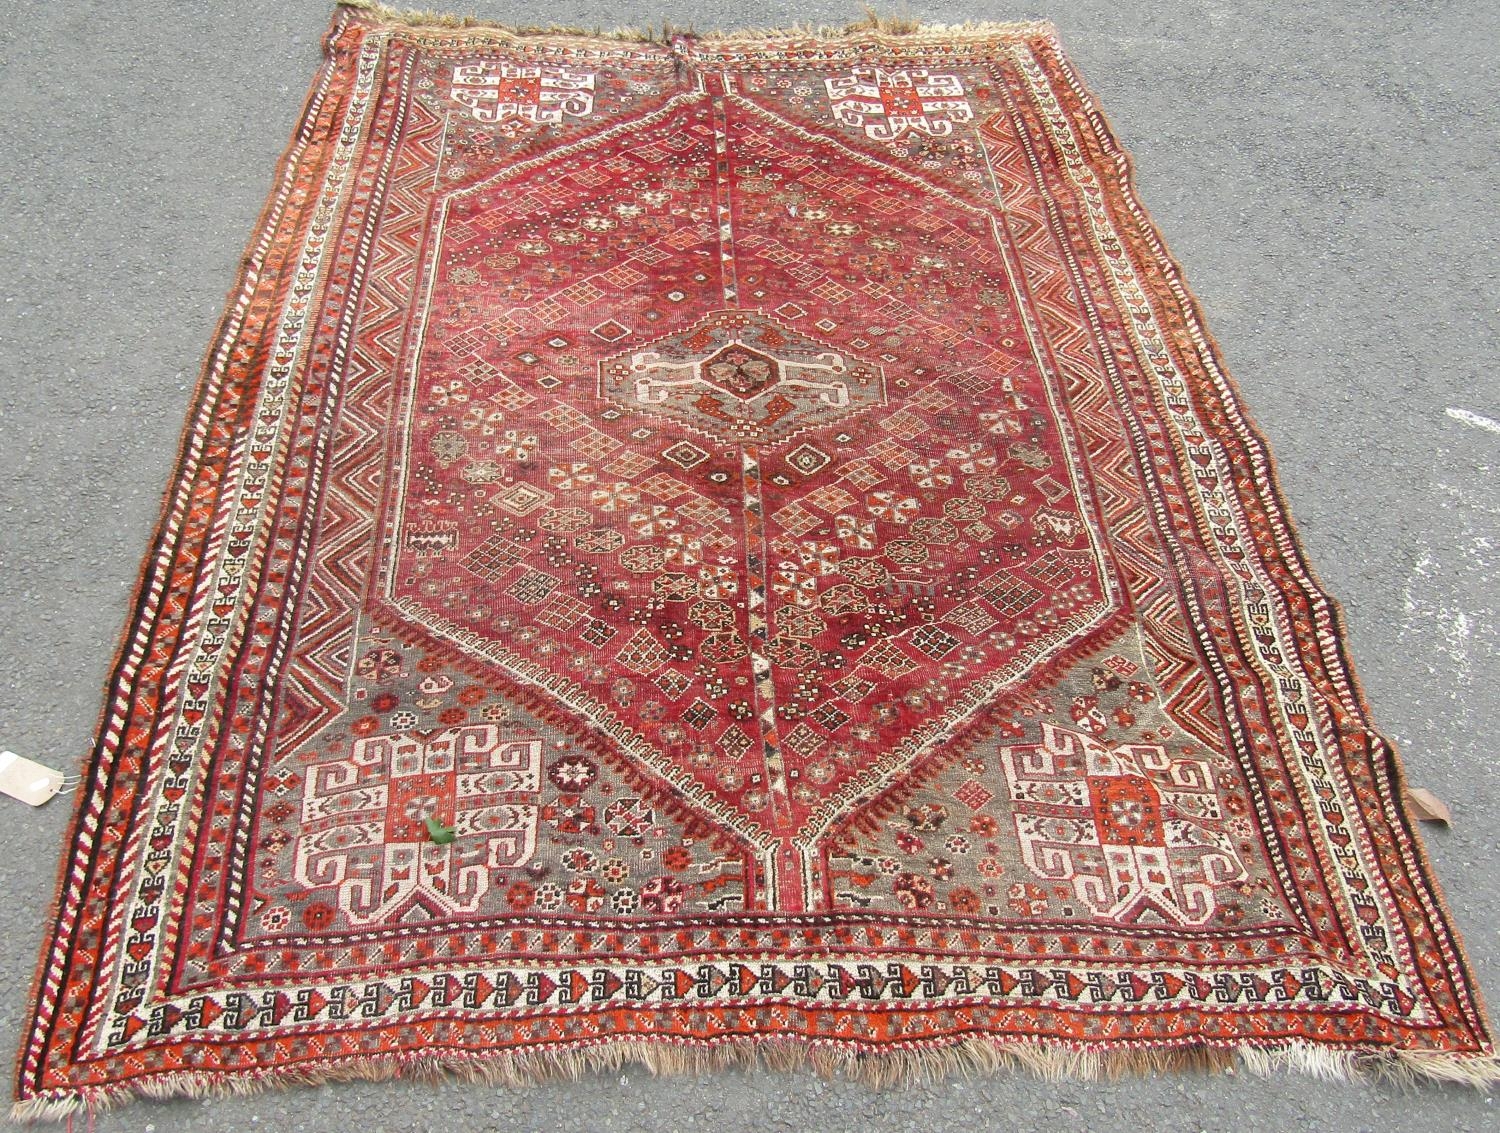 A slightly worn old Persian carpet, 280cm x 200cm